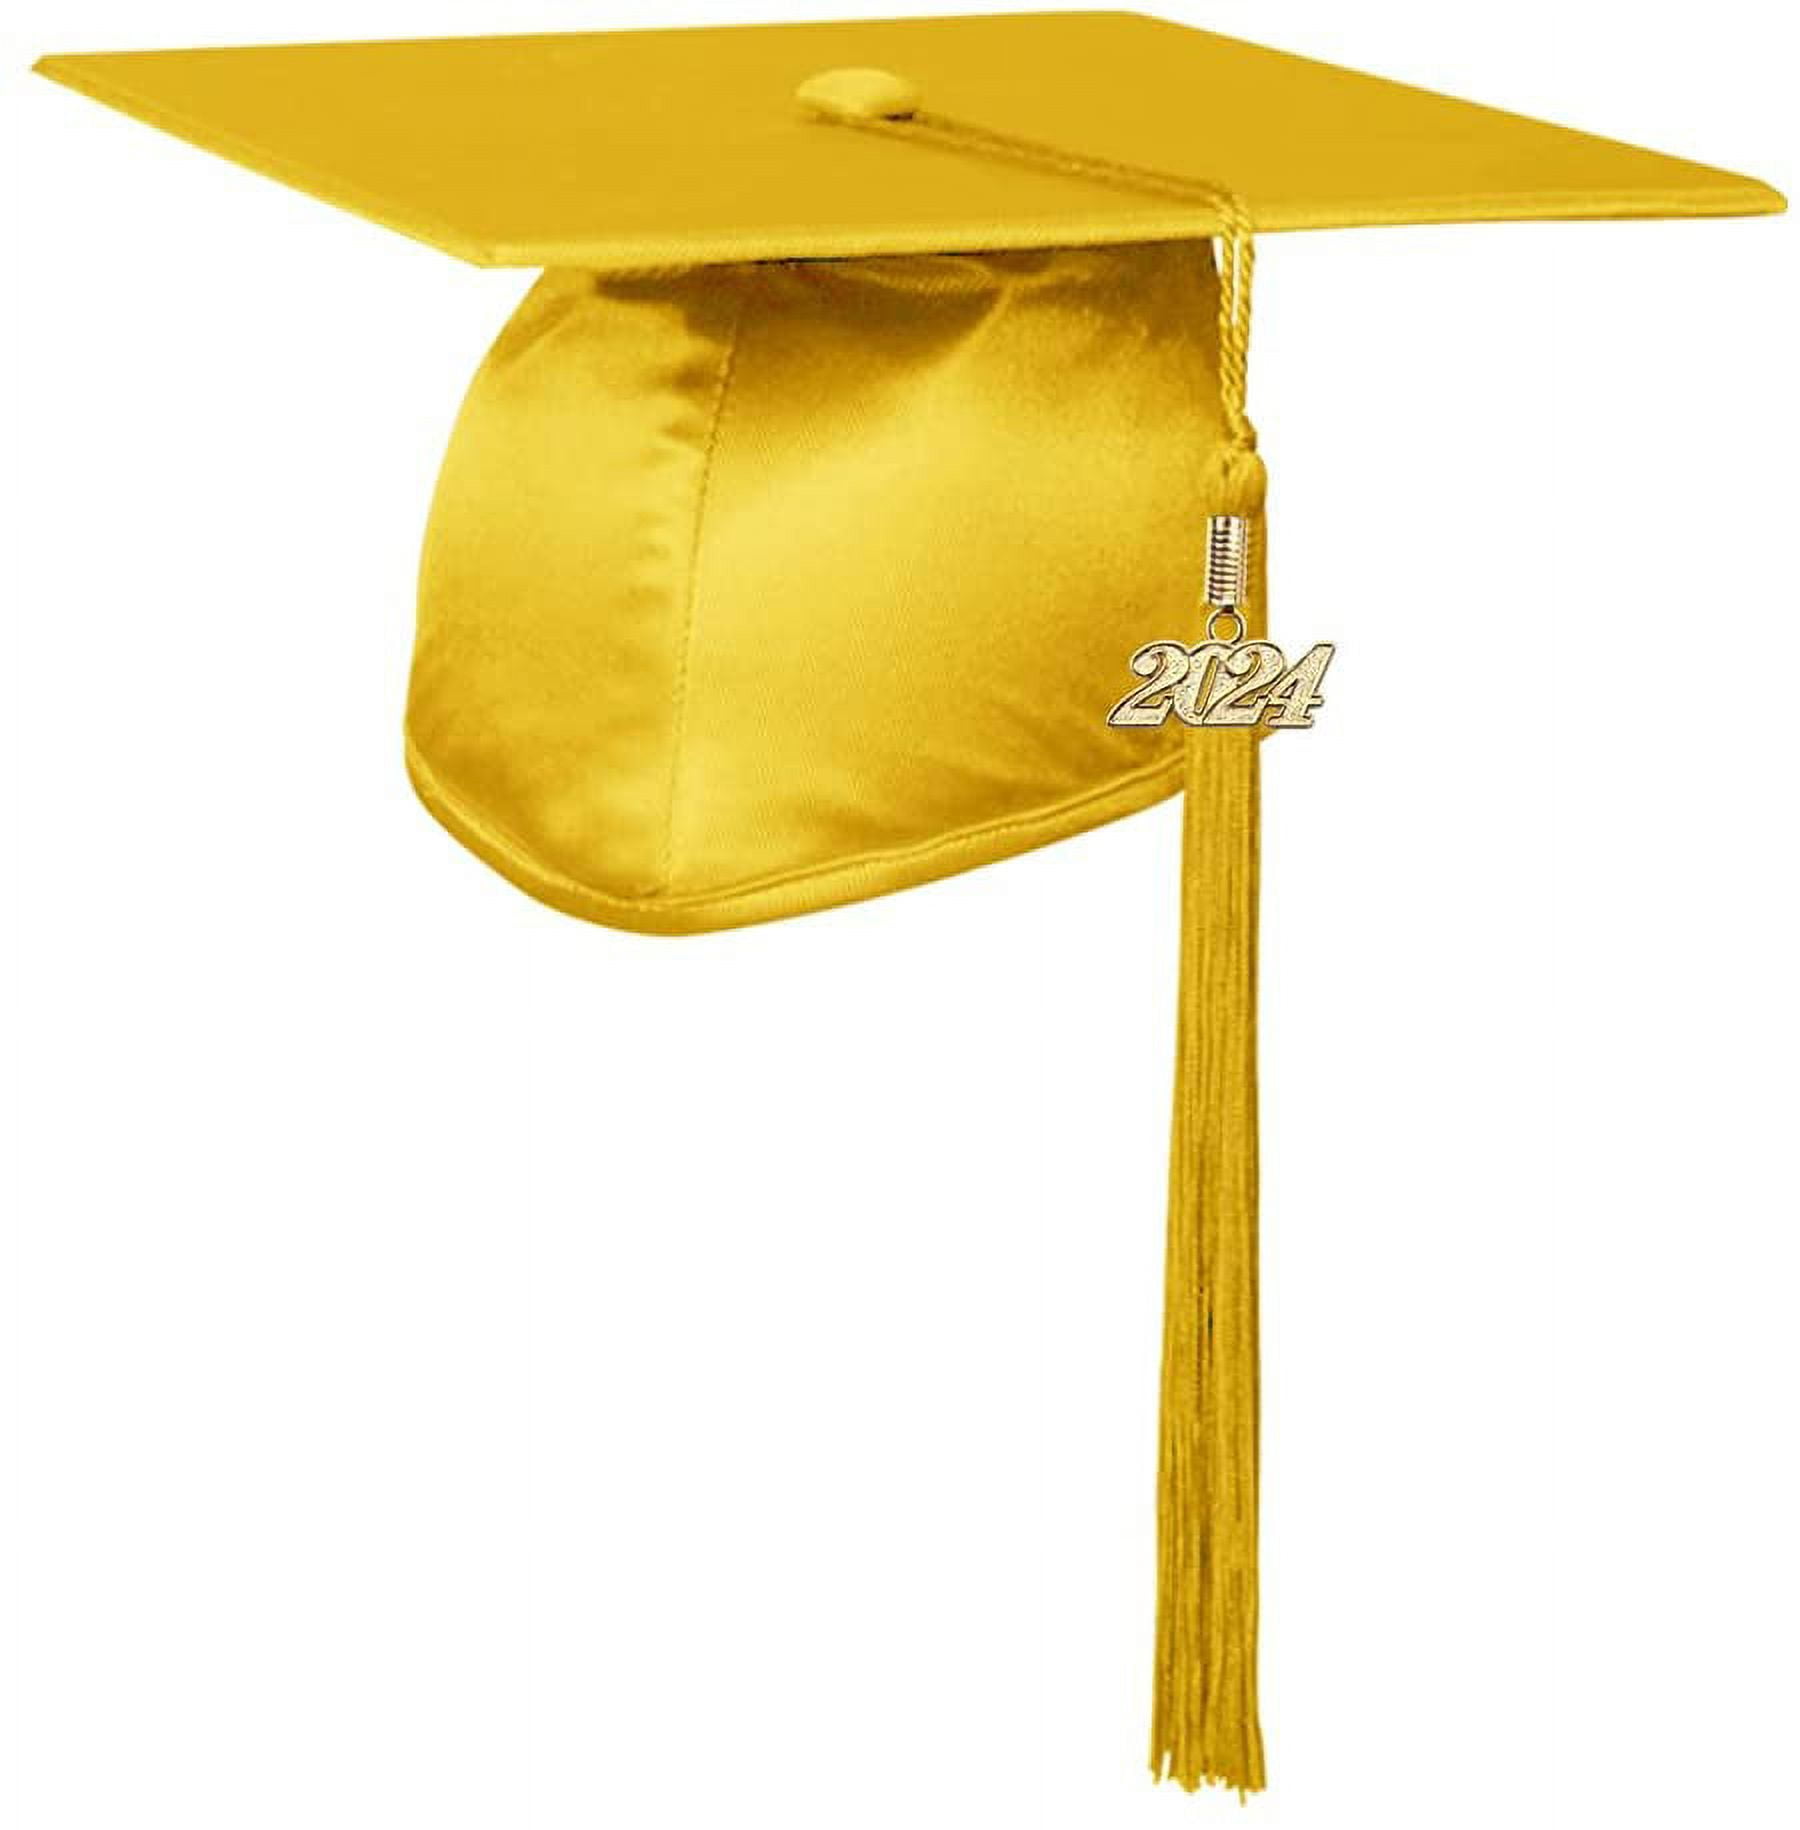 2024 Tassel Graduation 2024 Graduation Tassel 2024 Blue and Gold,Graduation  Gifts, Graduation Cap Decorations,2 pcs Gold Tassel for Graduation Cap